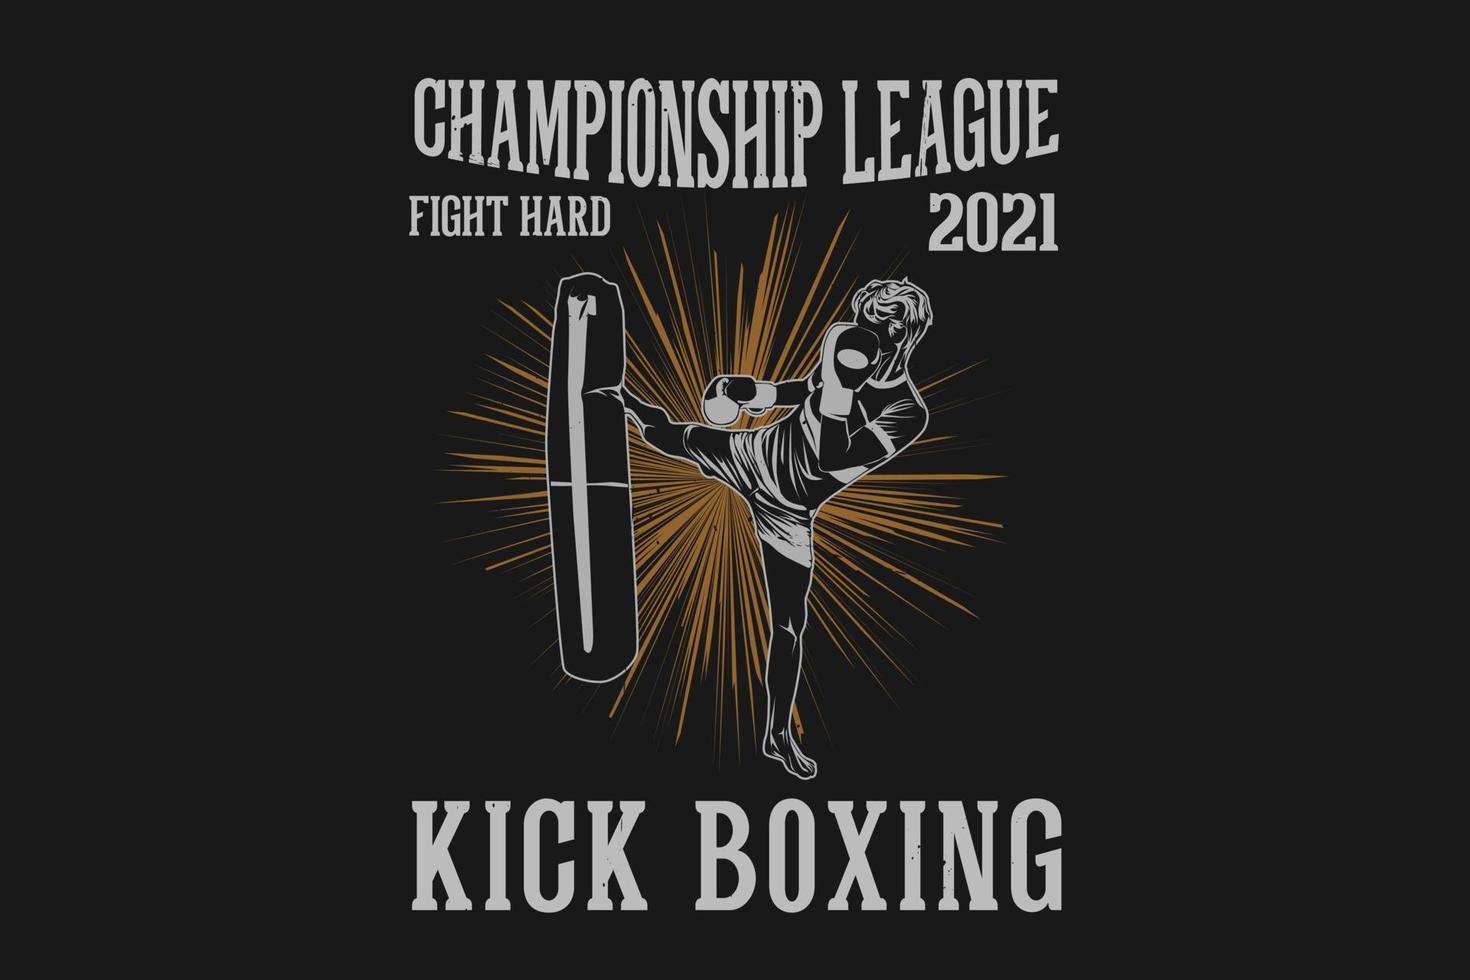 Championship league fight hard kick boxing silhouette design vector